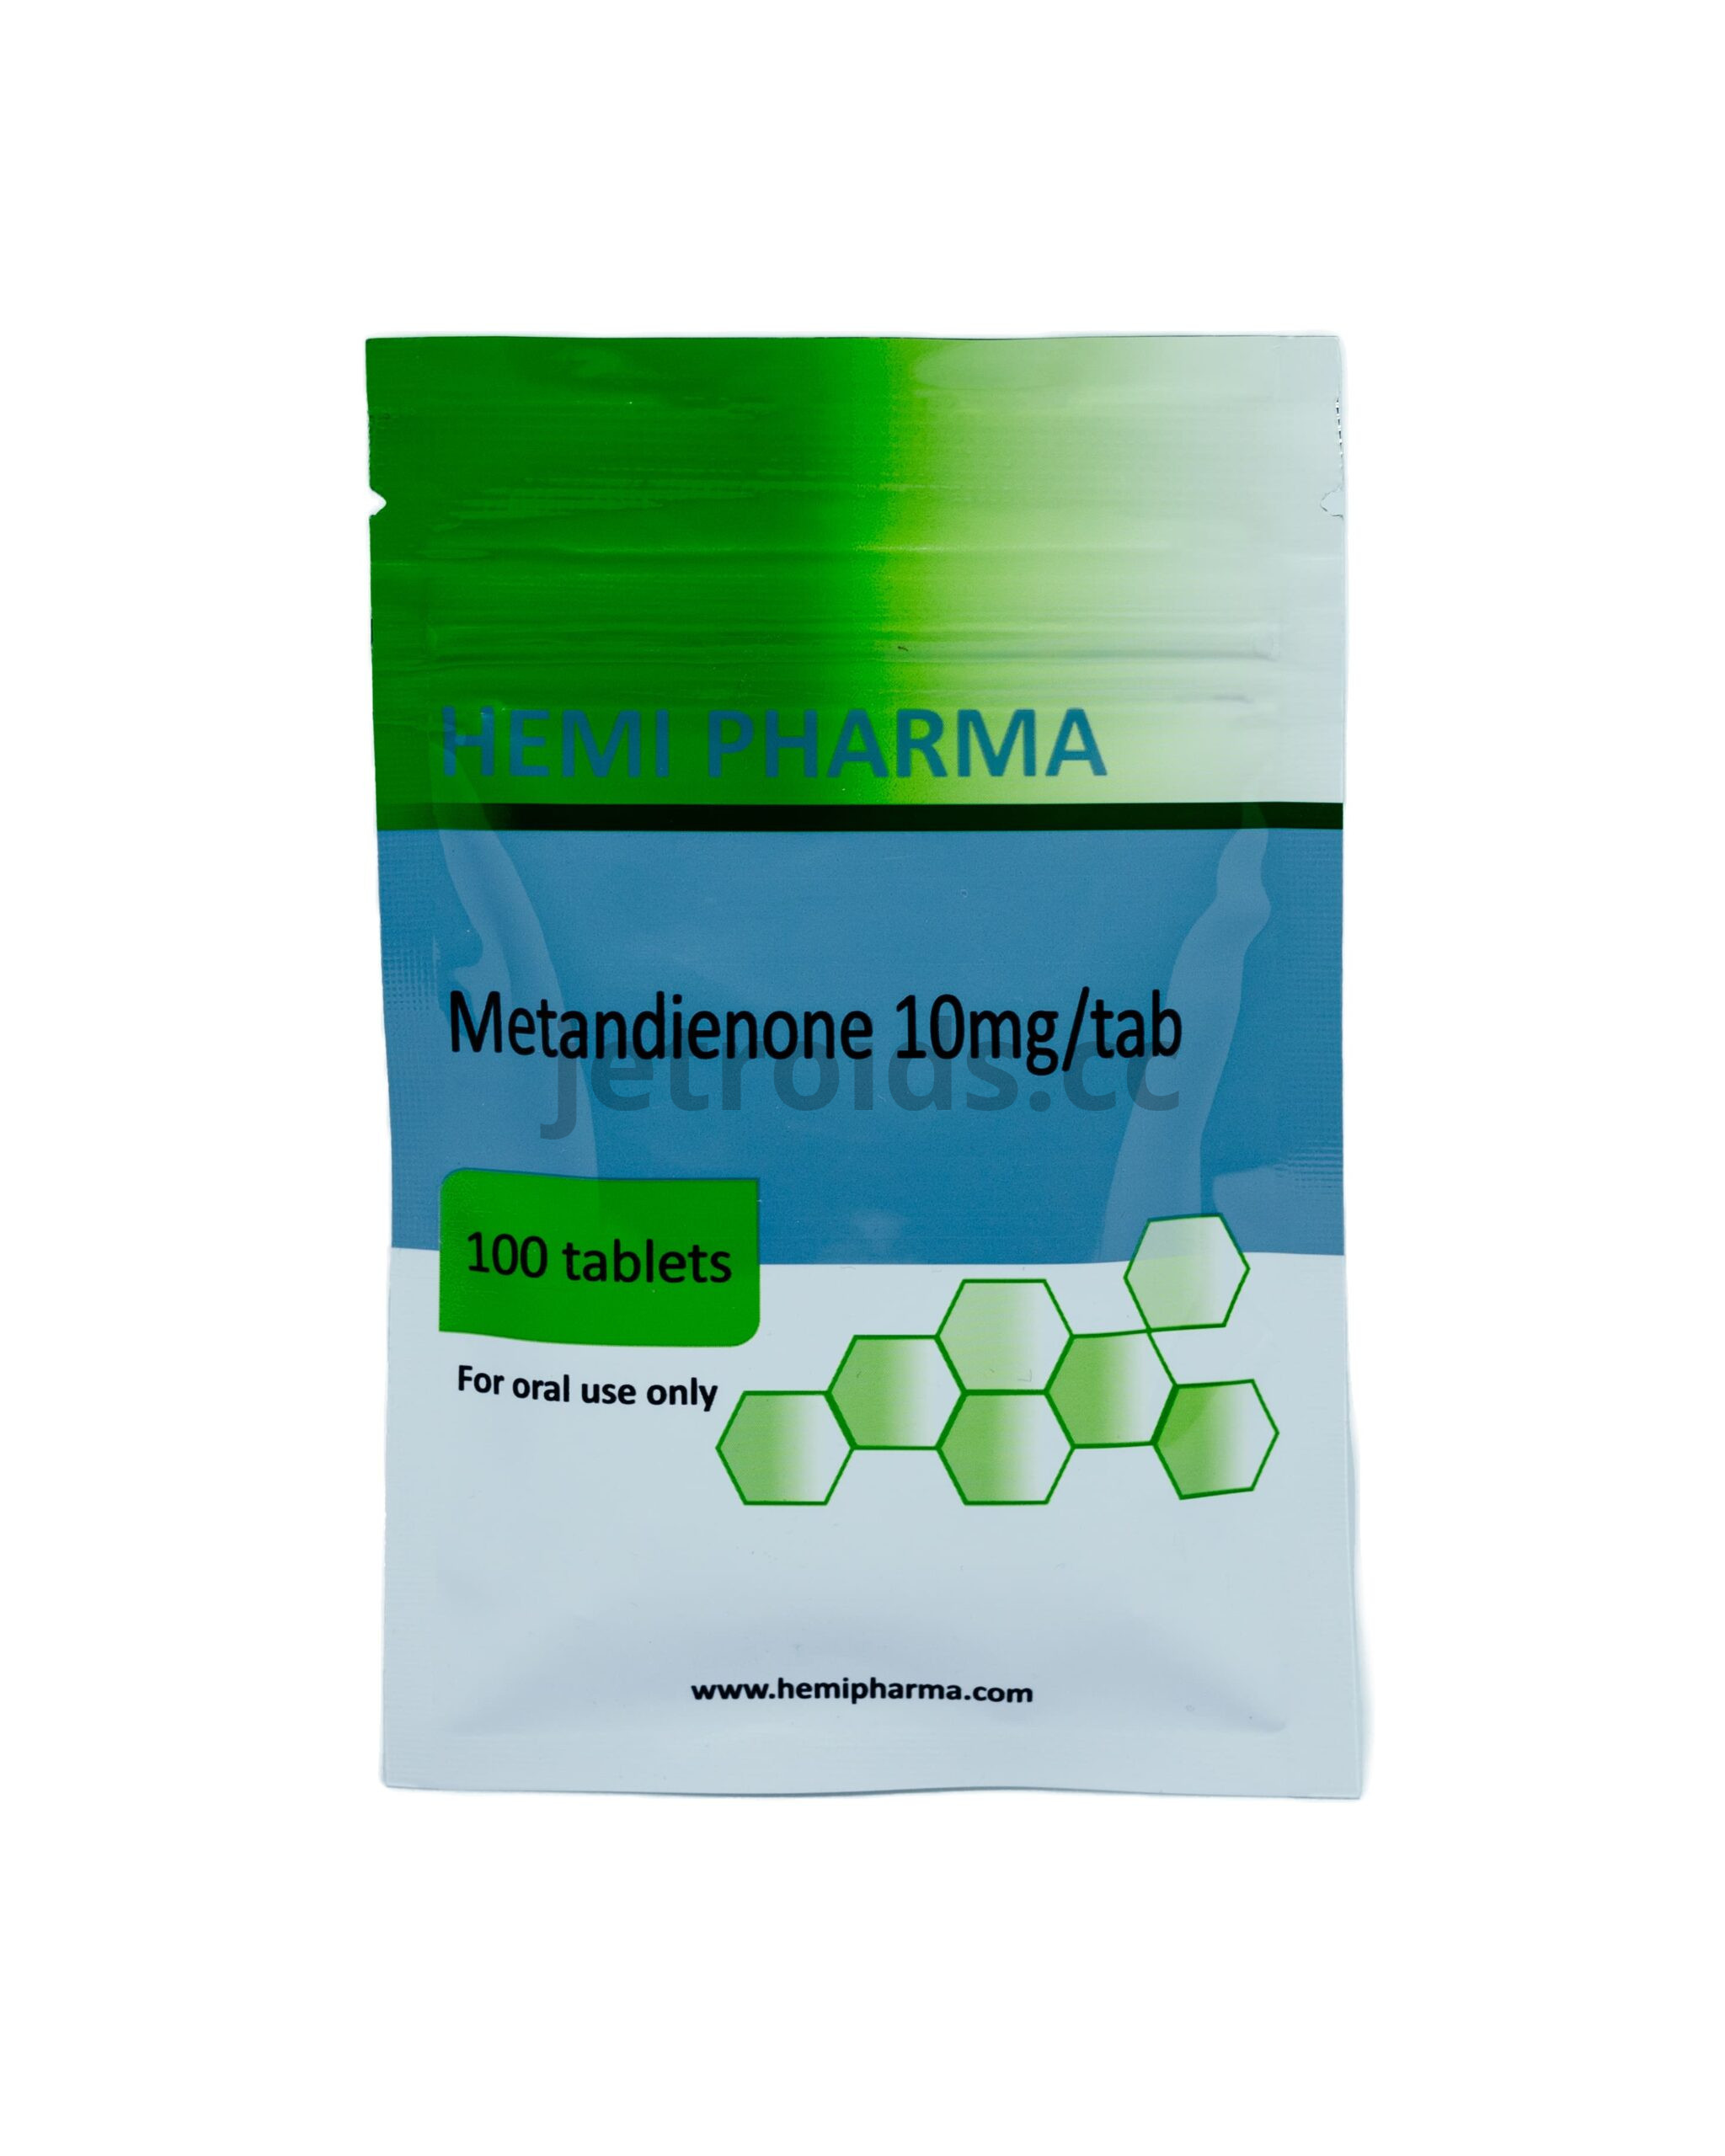 Hemi Pharma Methandienone-10 Product Info